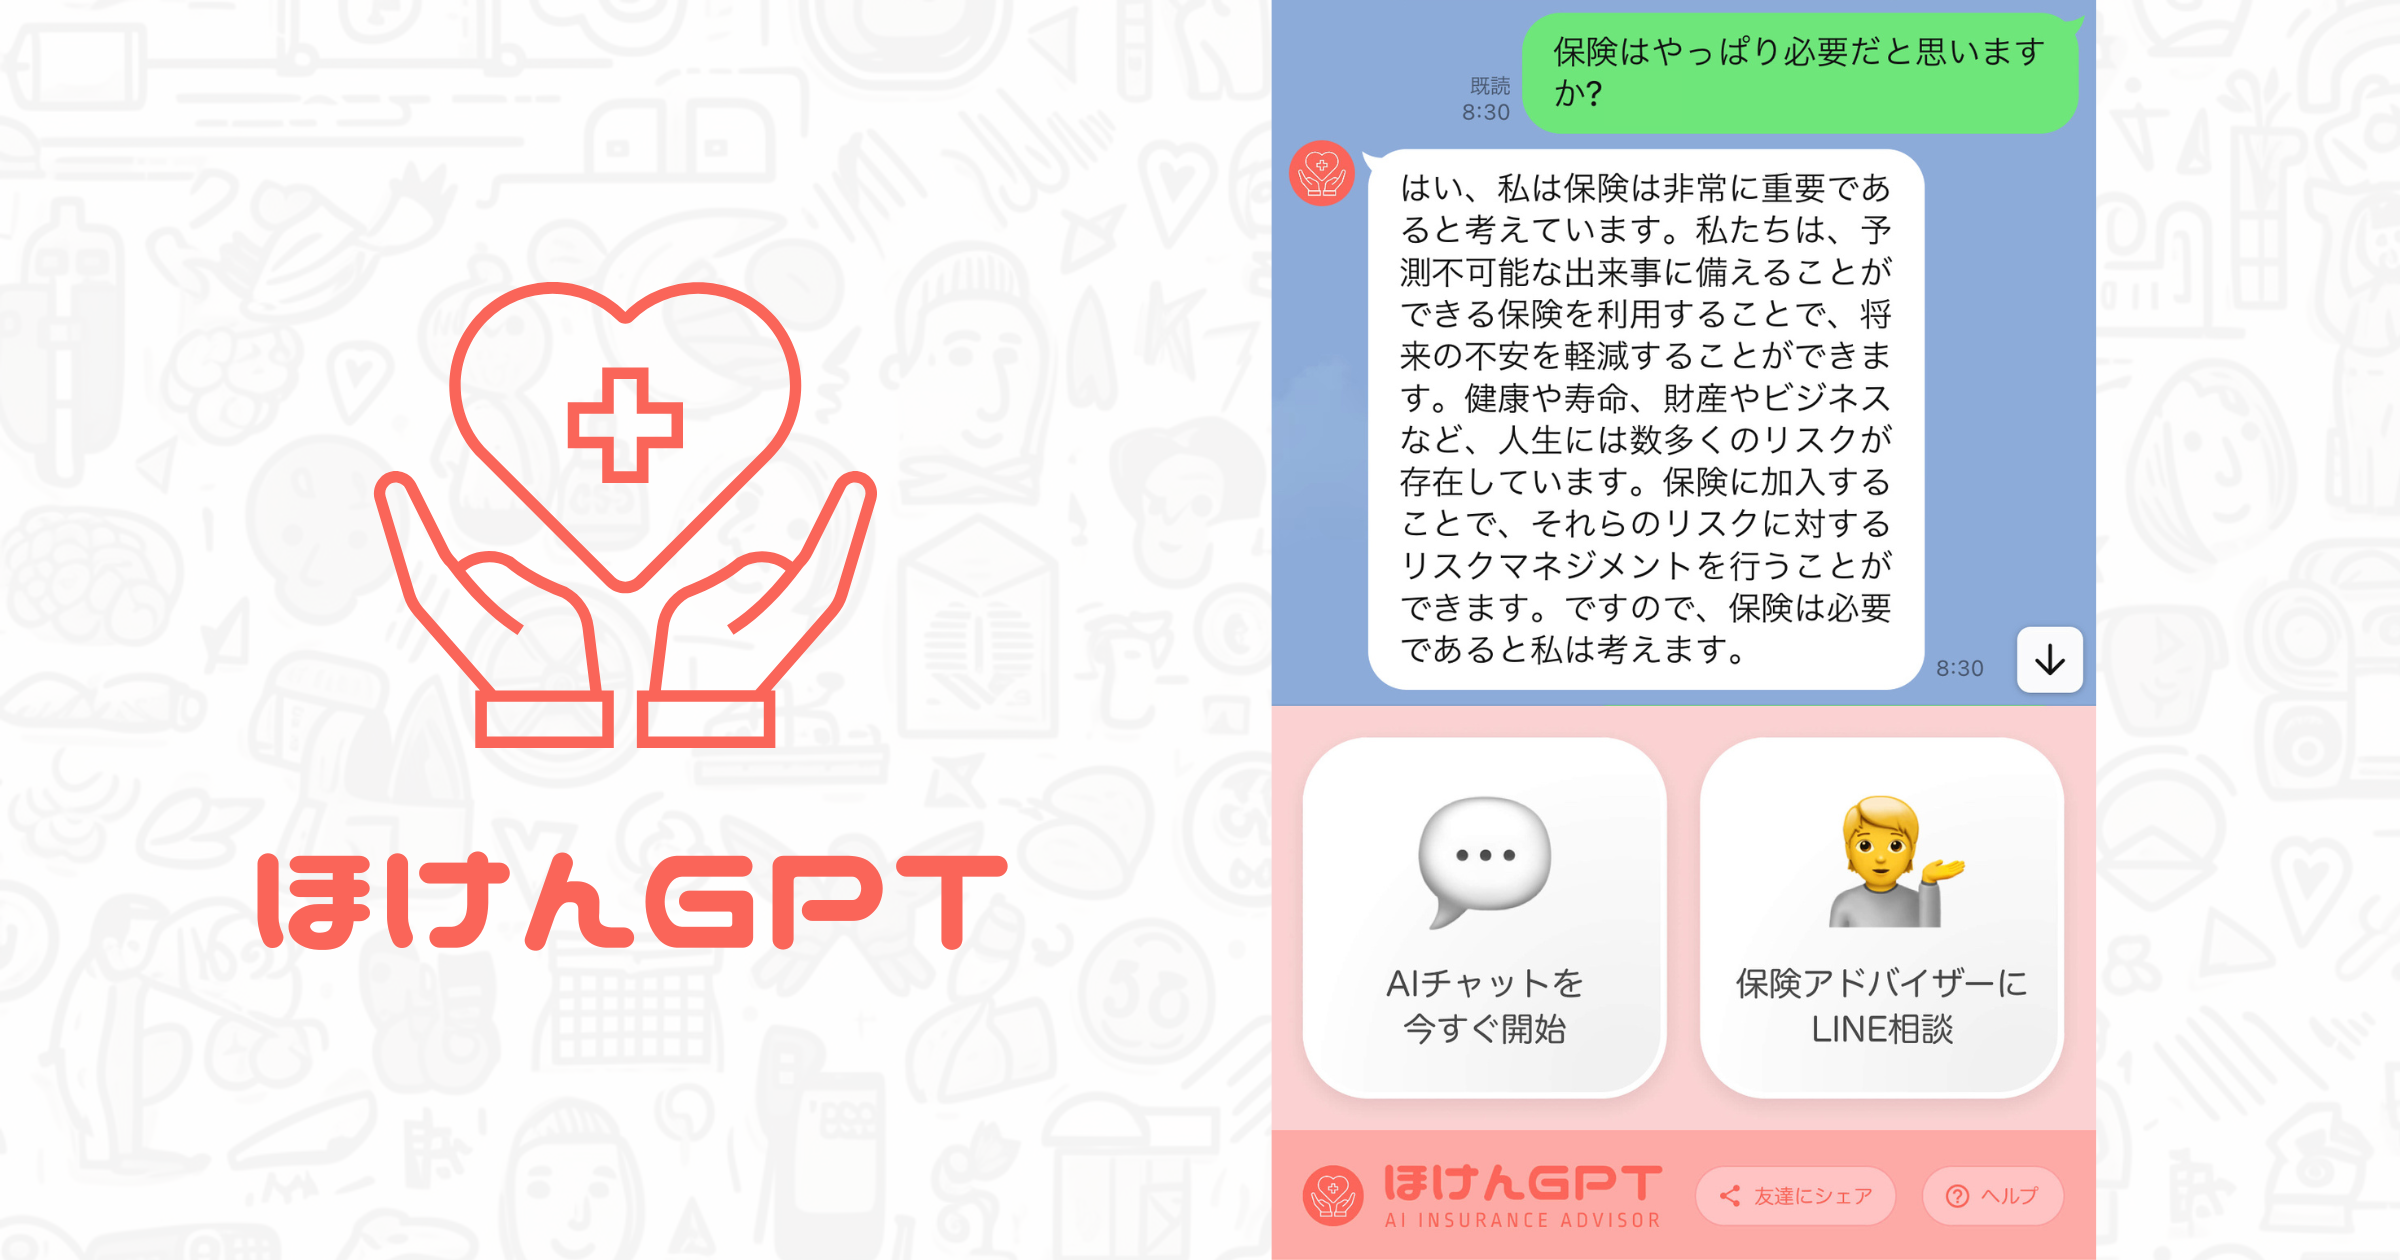 ChatGPT活用の保険相談AIチャット「ほけんGPT」。LINEでAIが約20秒以内に回答